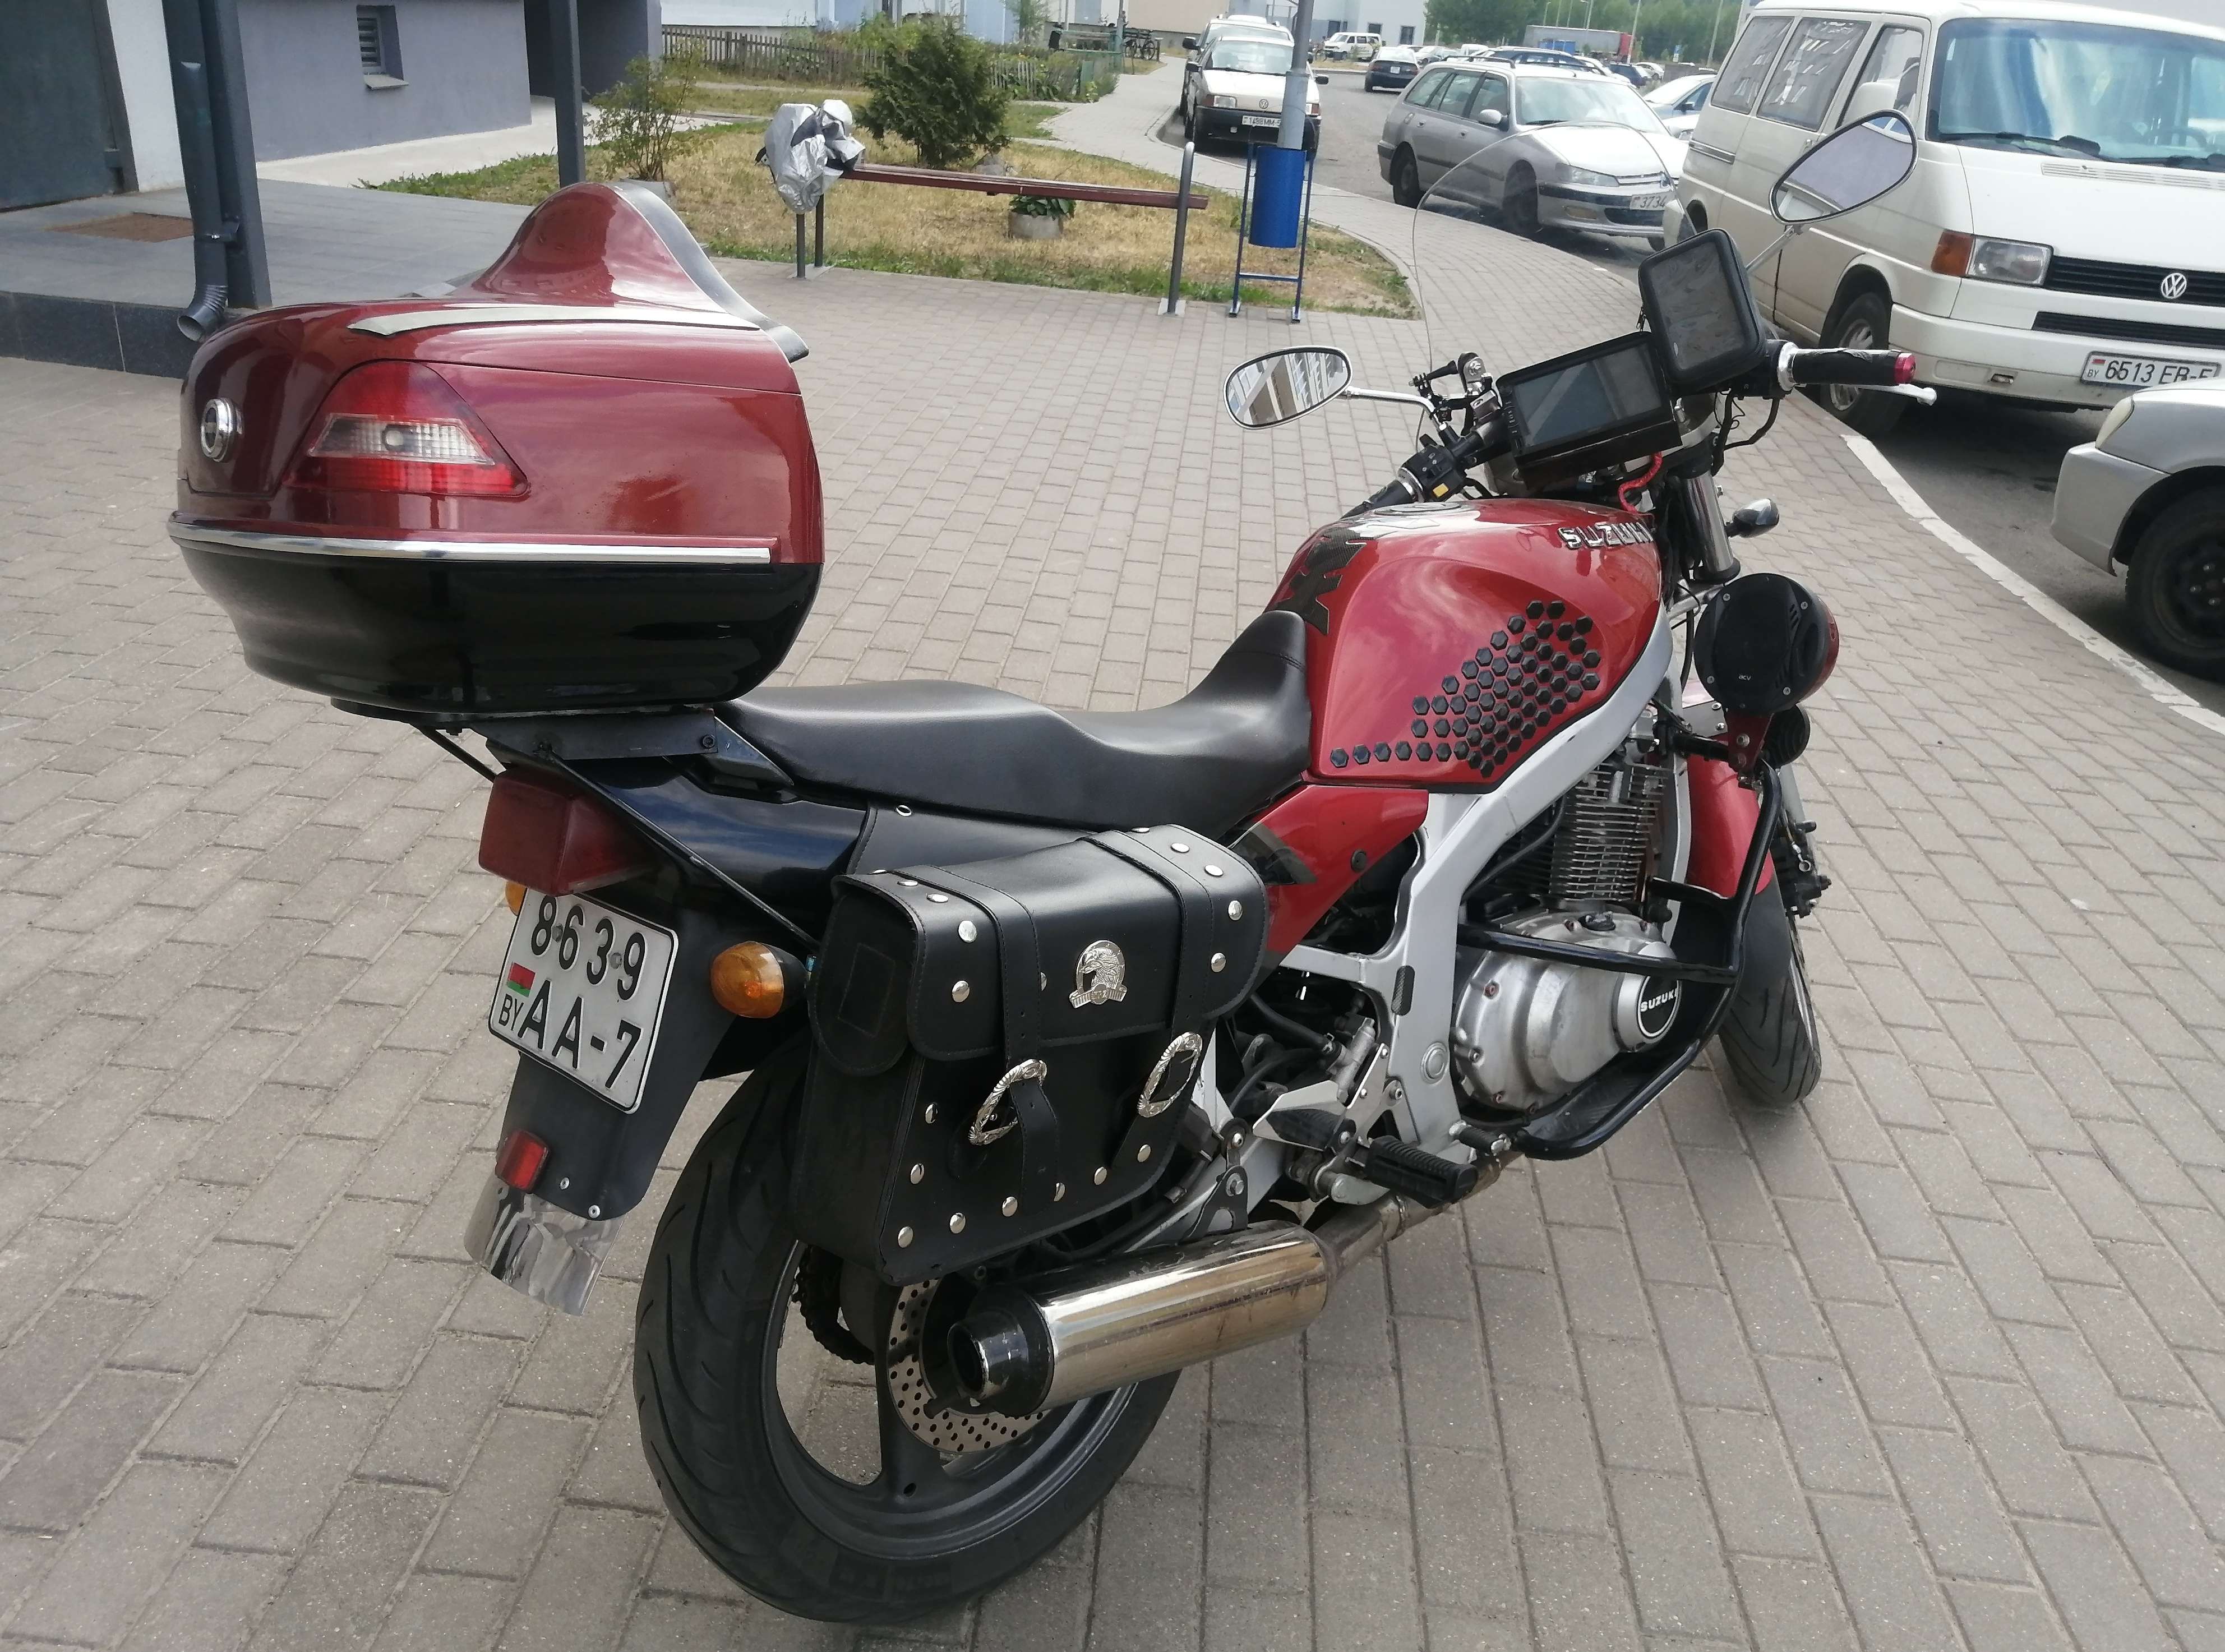 Купить мотоцикл Suzuki GS в Беларуси в кредит - цены, характеристики, фото. в Беларуси в кредит